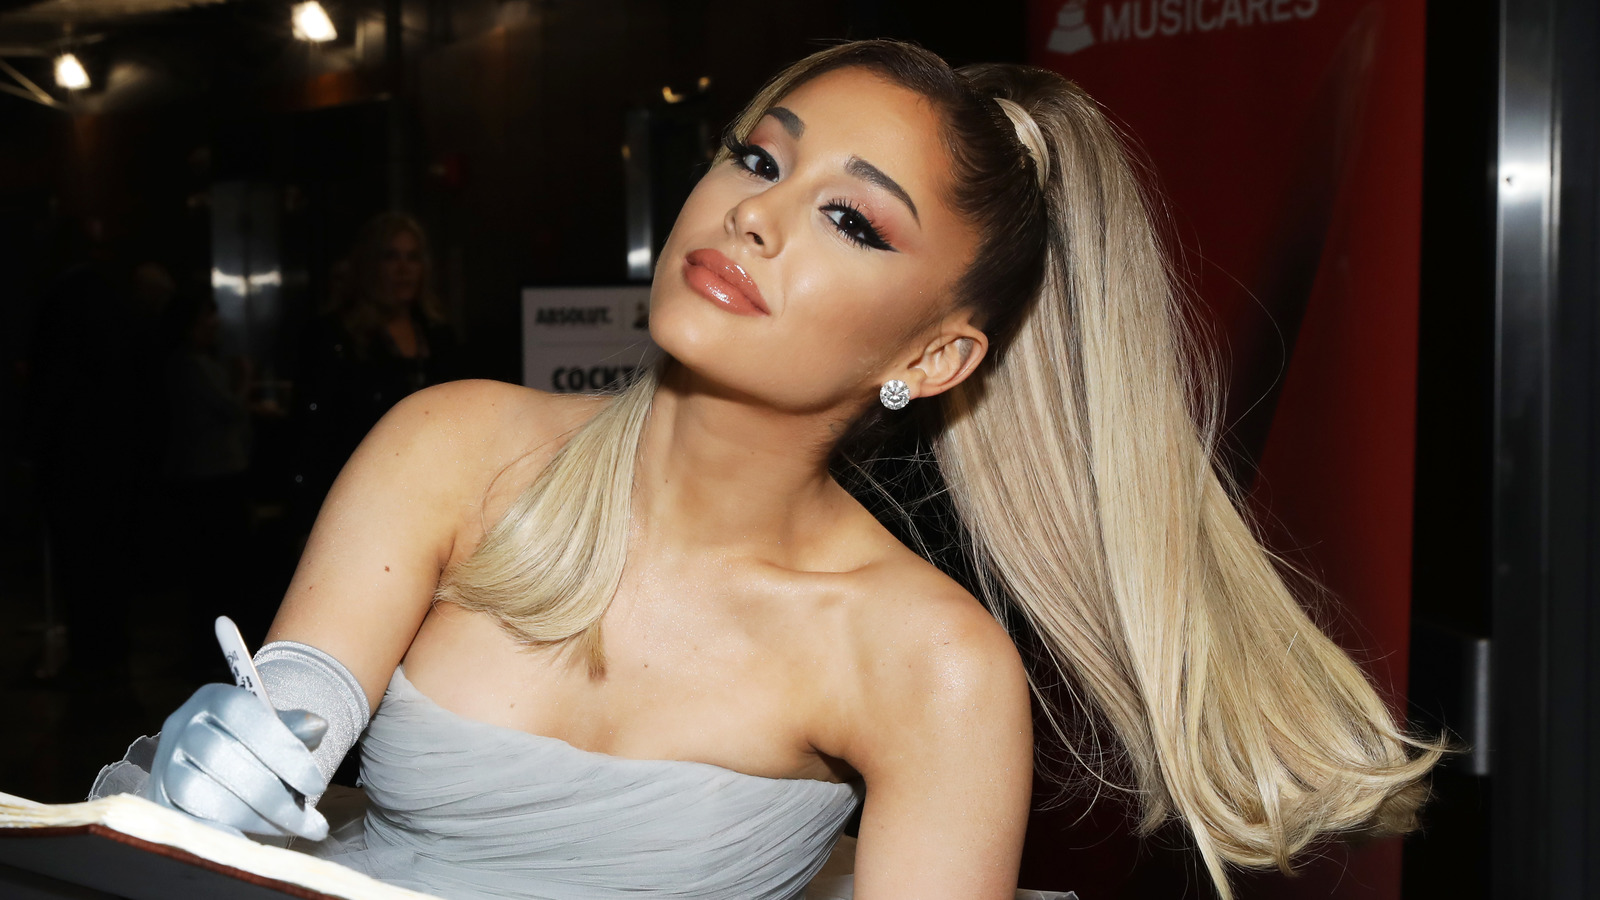 25 Best Ariana Grande Hairstyles – Ariana Grande Hair Ideas and Colors